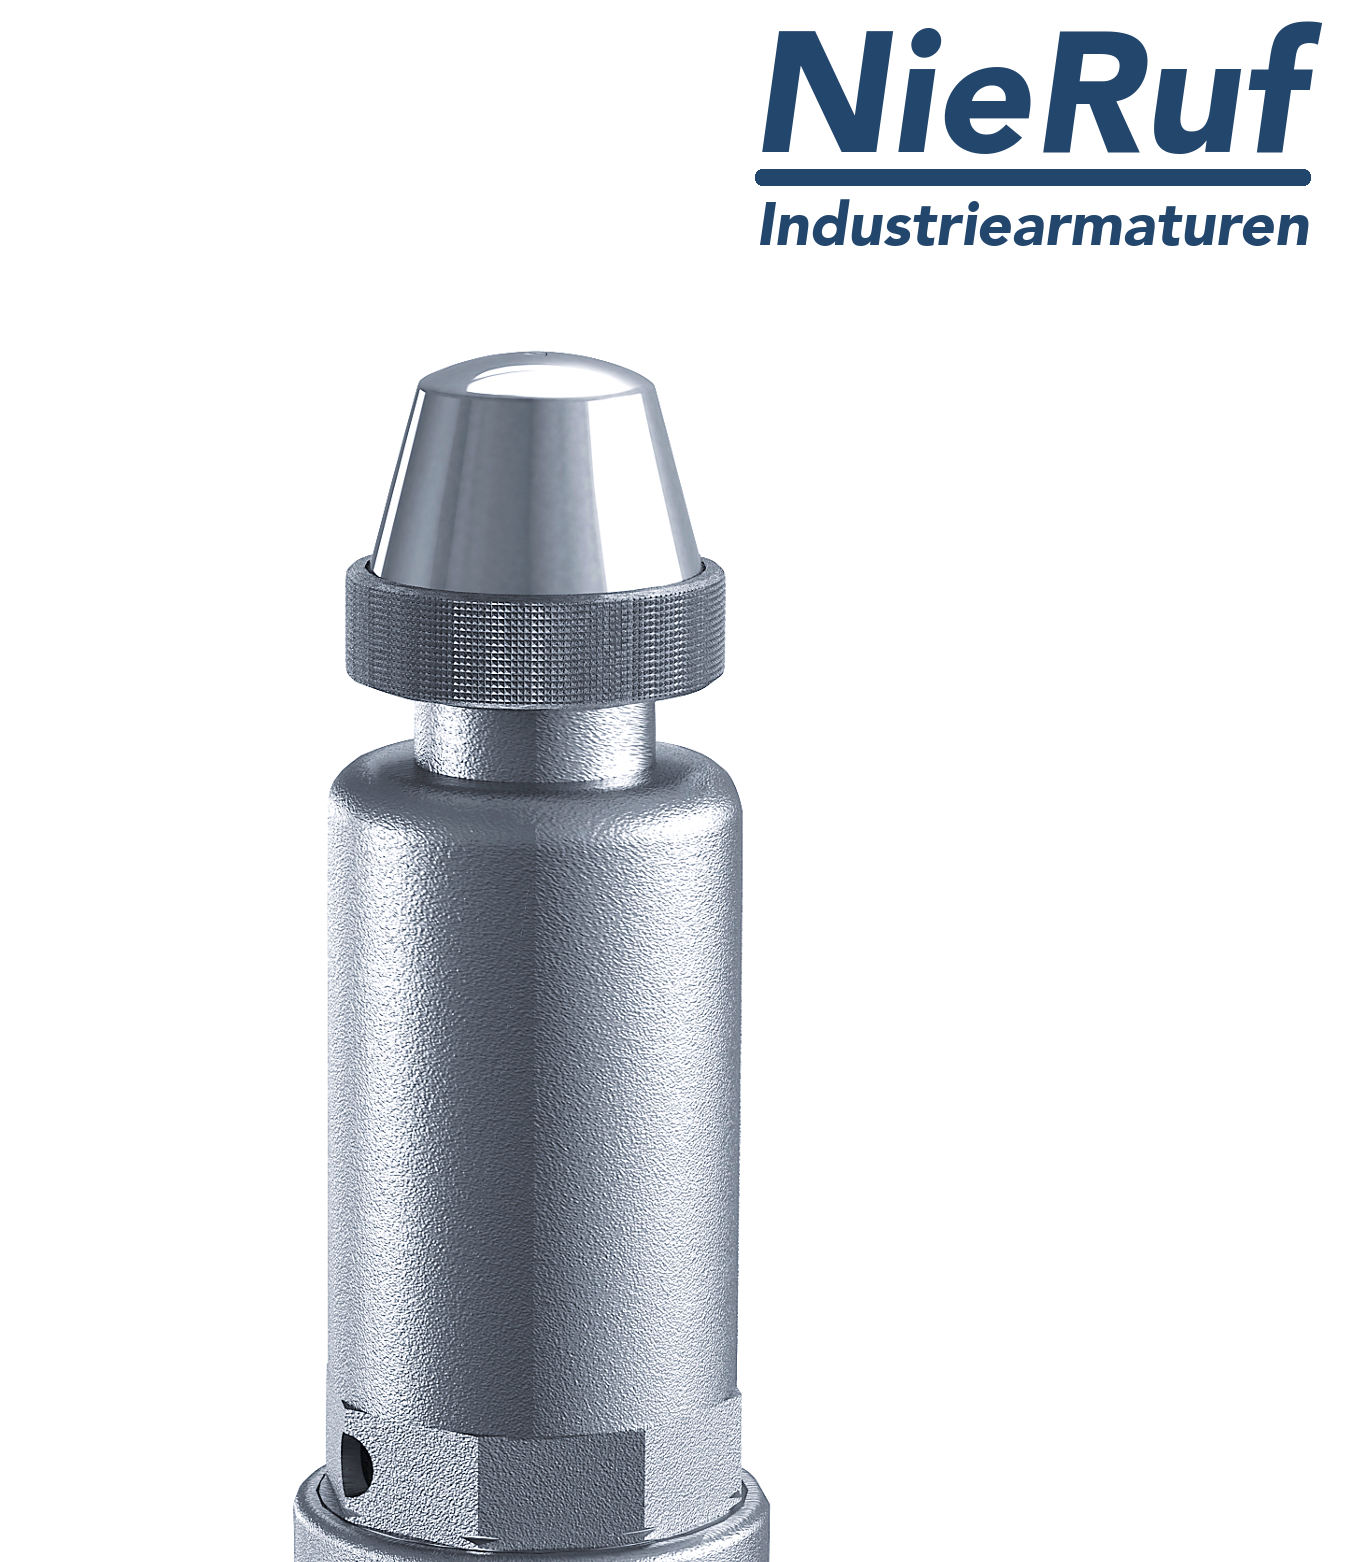 safety valve 1 1/2" x 2" fm SV05 neutral liquid media, stainless steel EPDM